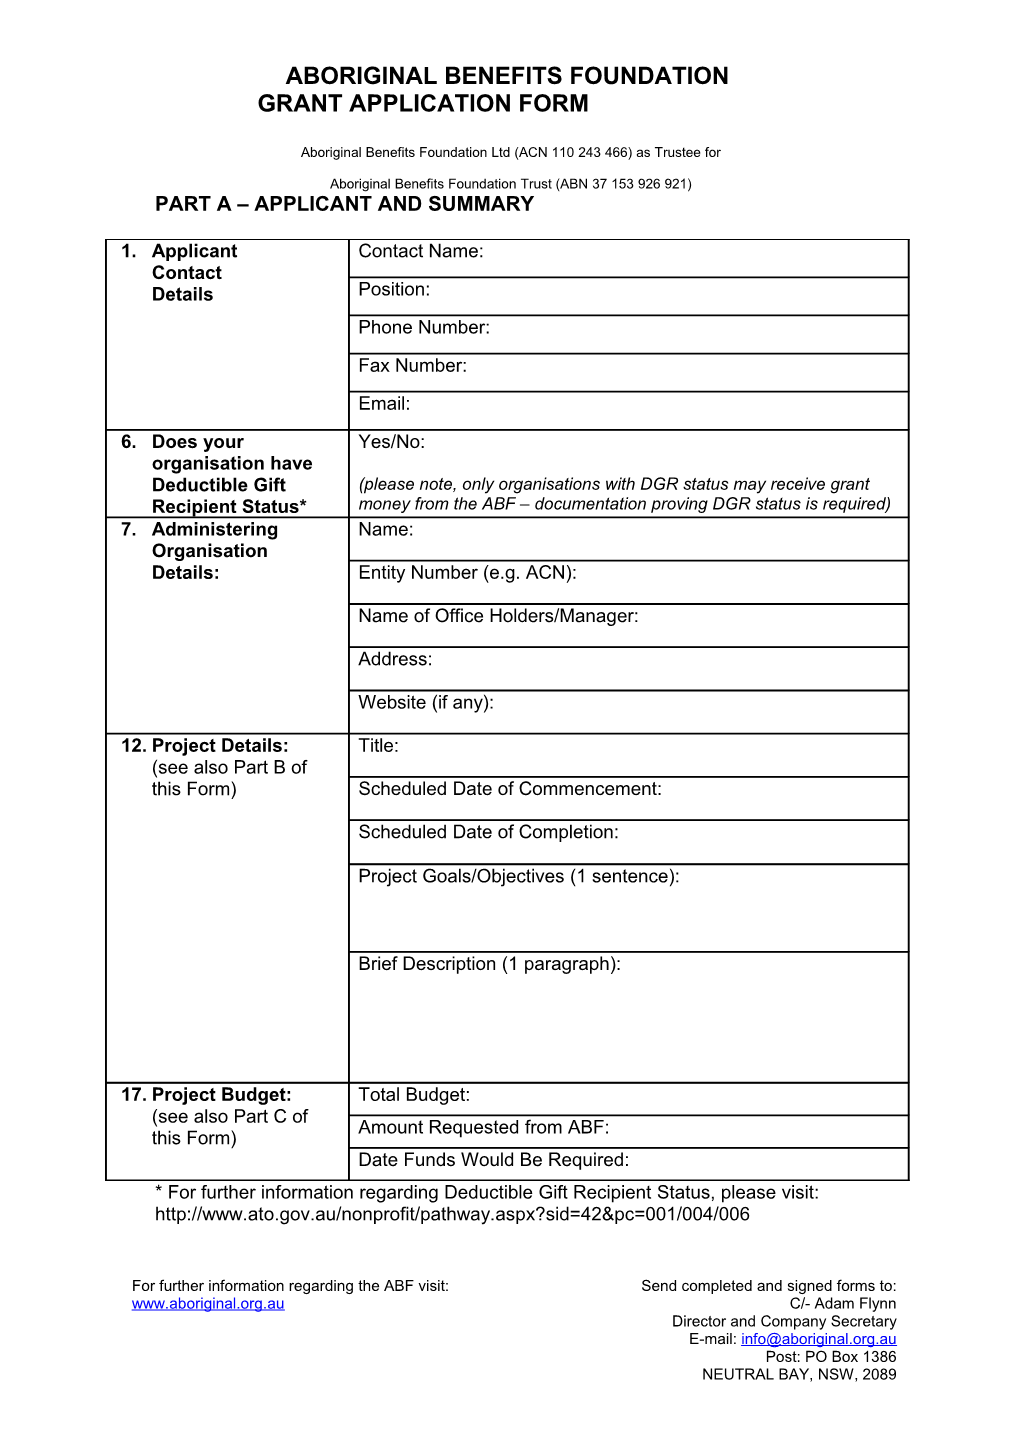 ABF - Grant Application Form